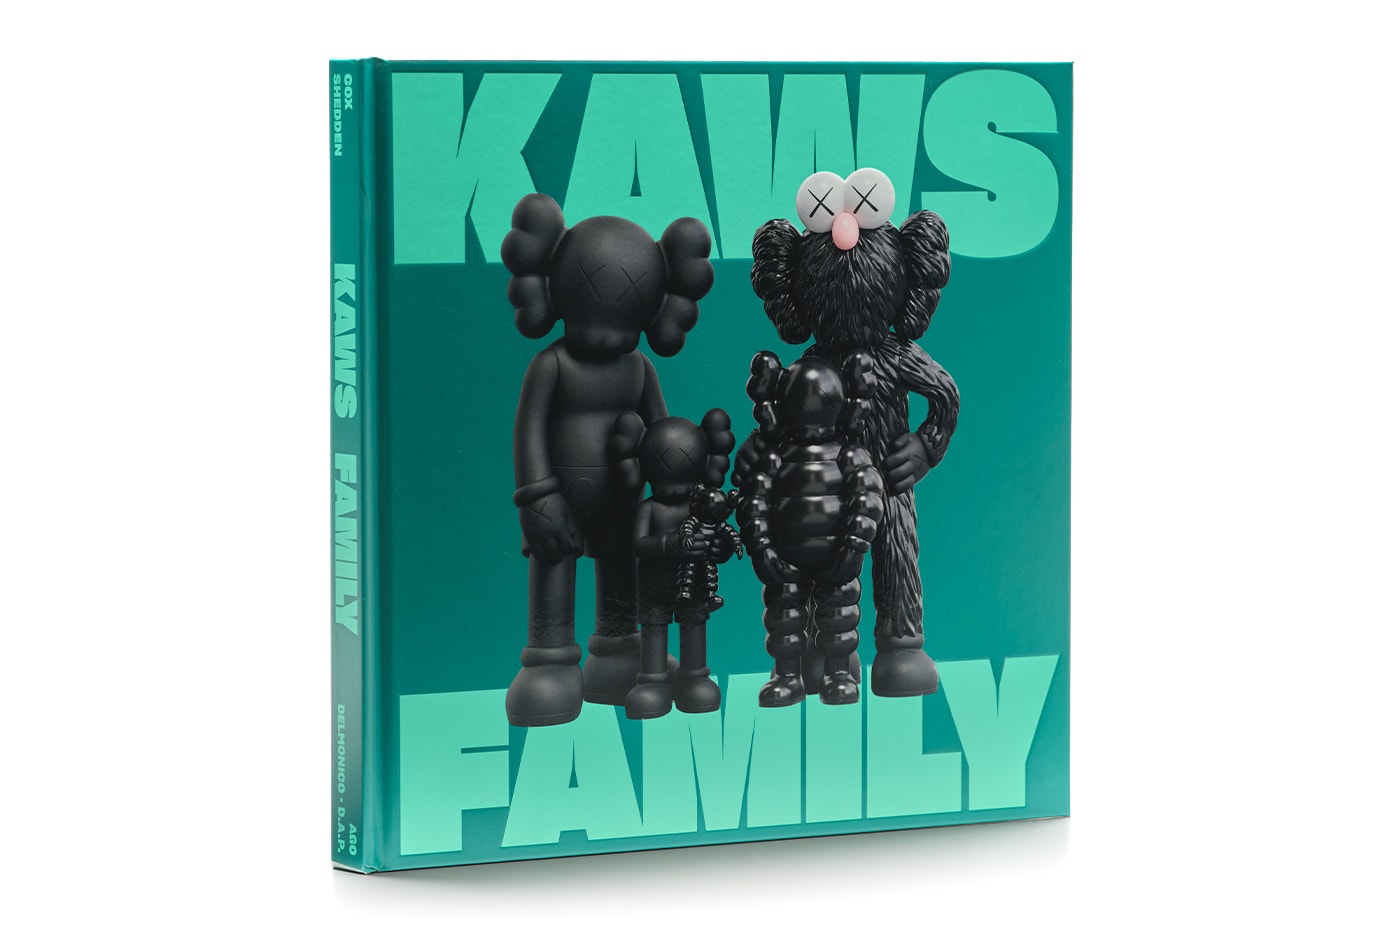 Art Gallery of Ontario 正式推出 KAWS 全新展覽書籍《KAWS: FAMILY》